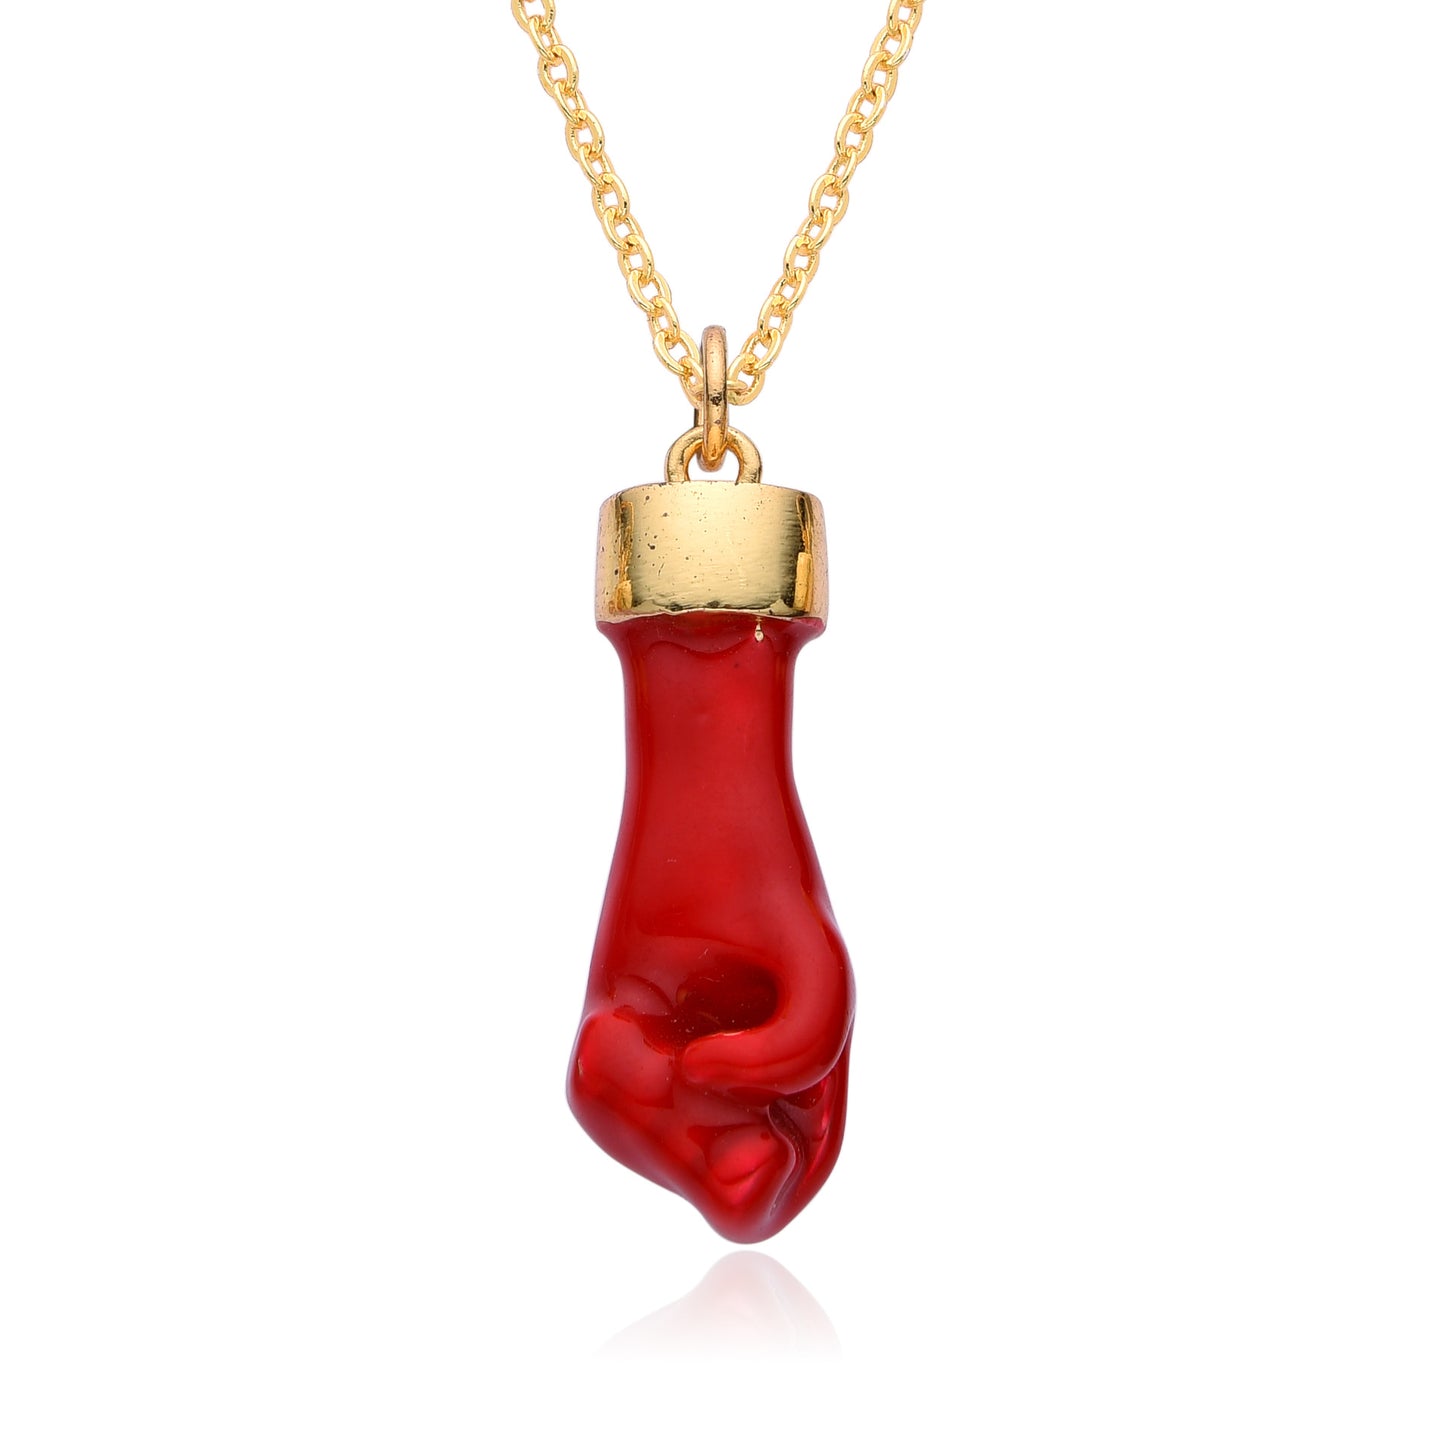 Copper IG Style Fist Pendant Necklace